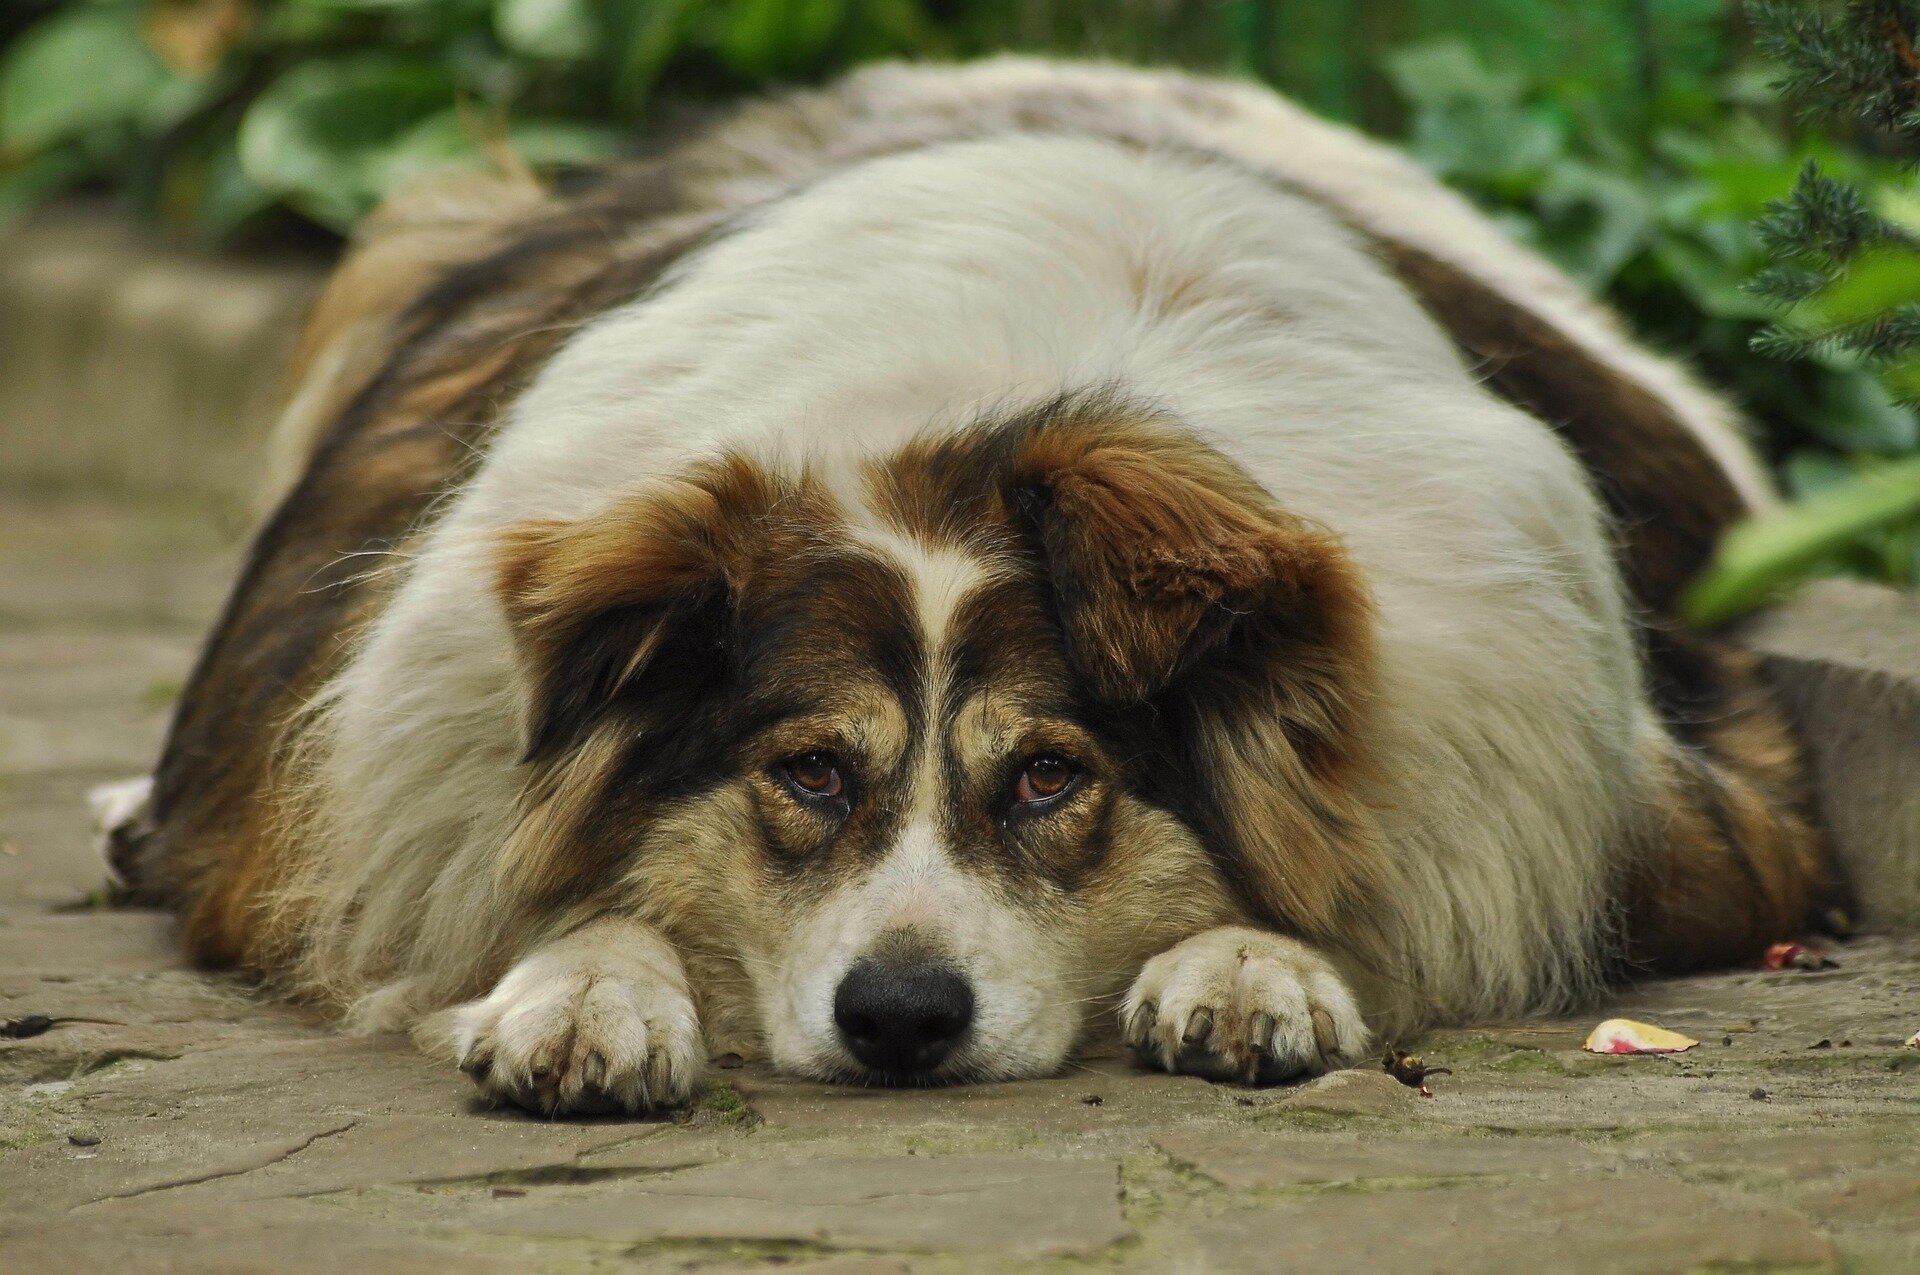 Study reveals surprising insights into dog sterilization, obesity